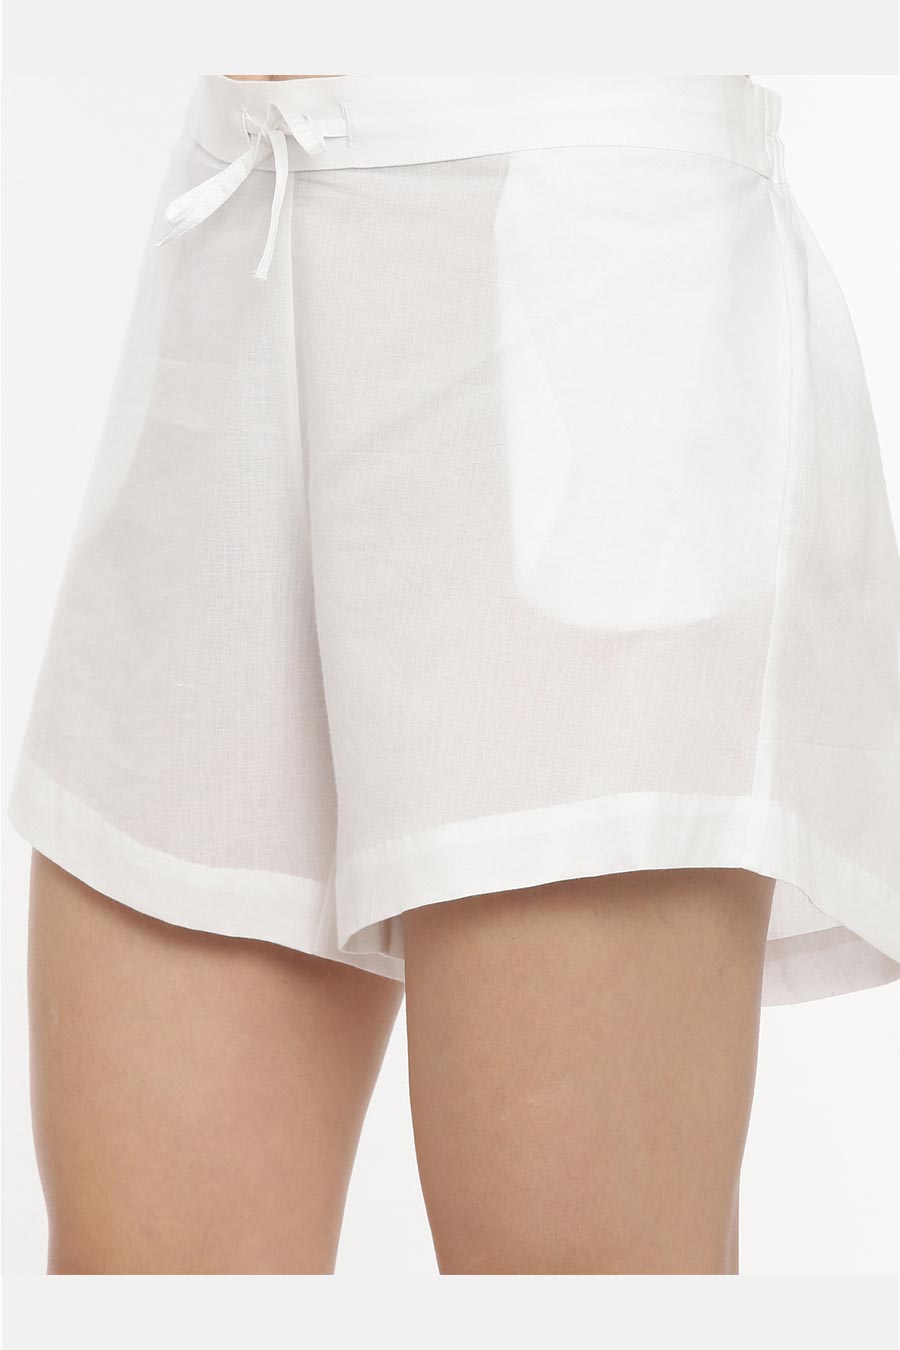 White Top & Short Nightwear Set With Overlay